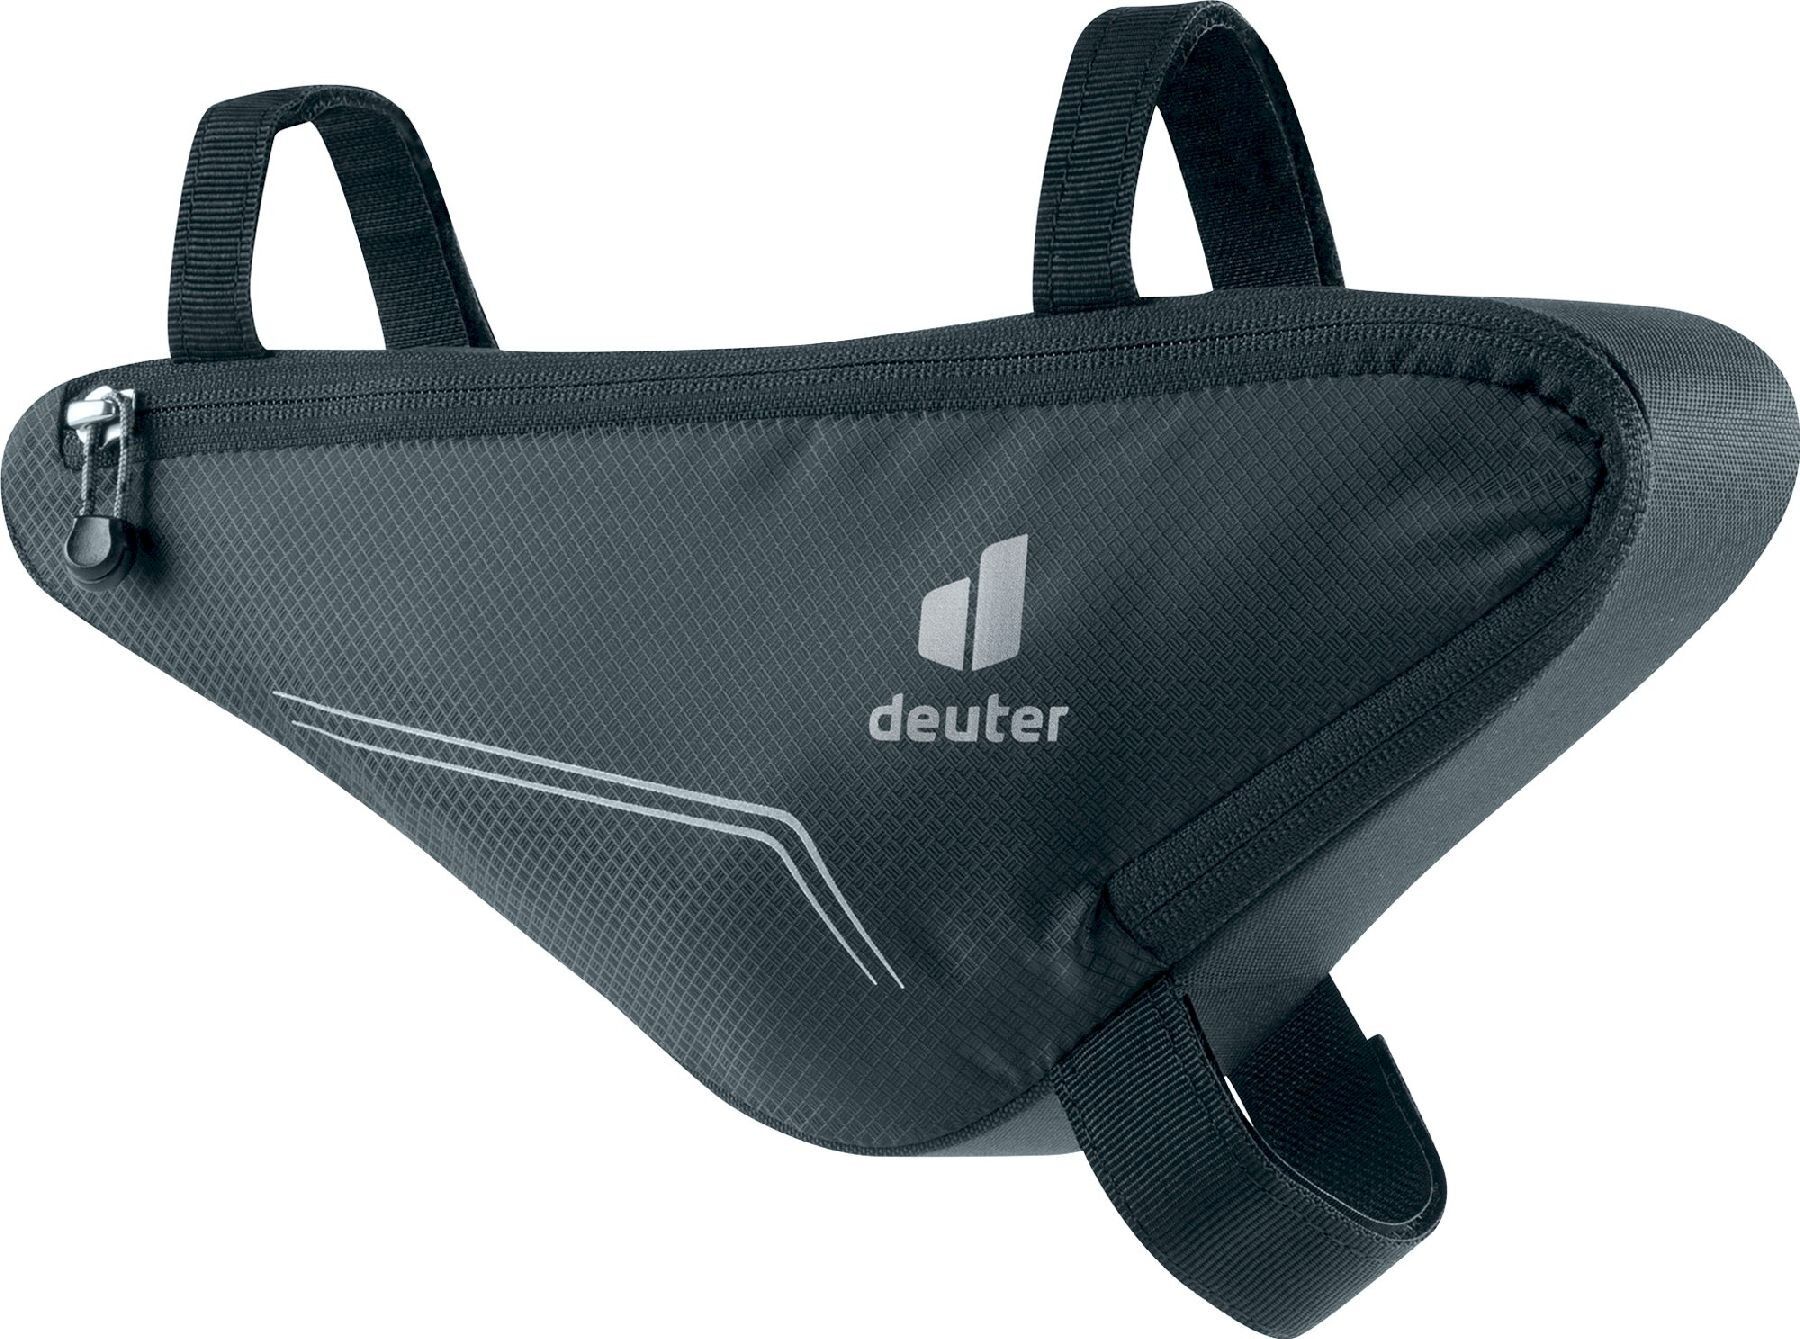 Deuter Front Triangle Bag - Top tube bag